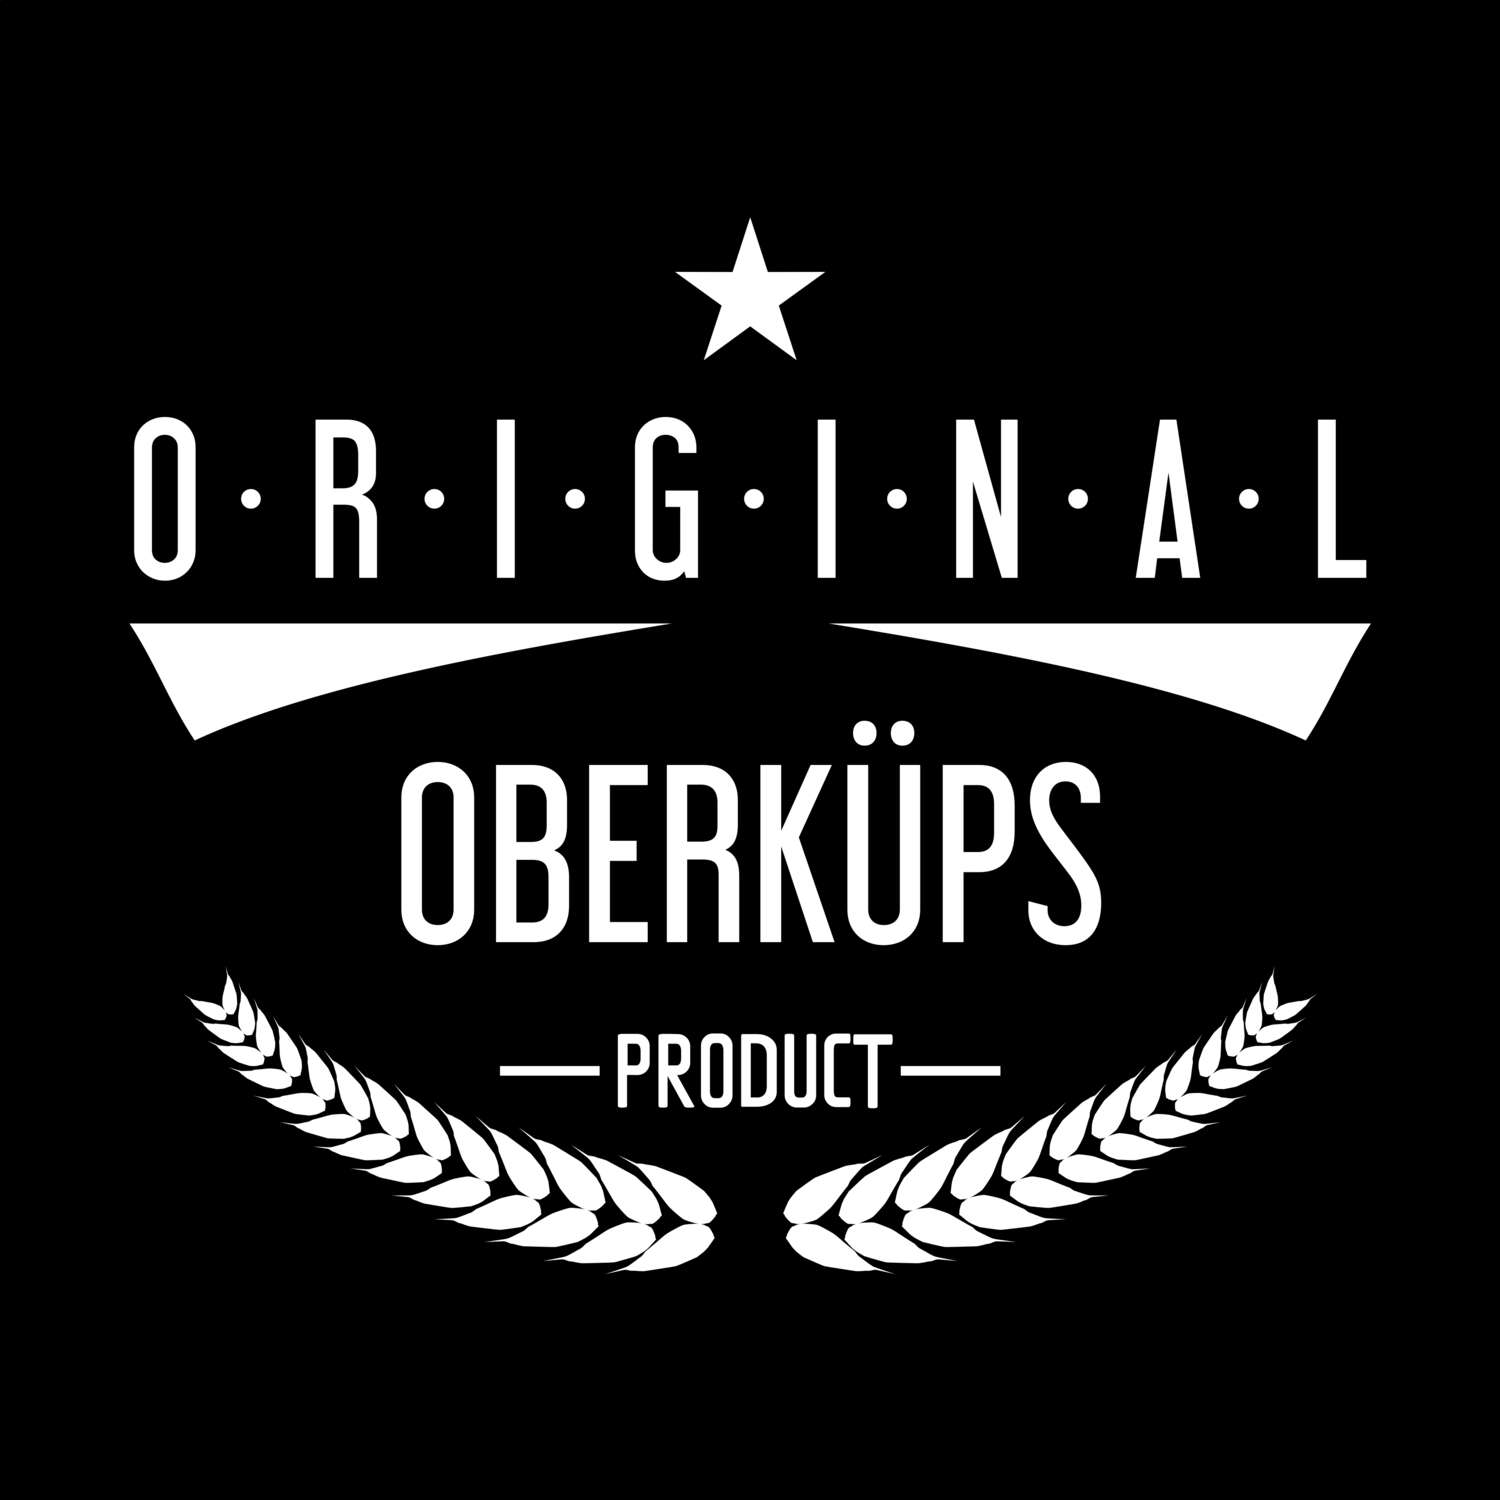 Oberküps T-Shirt »Original Product«